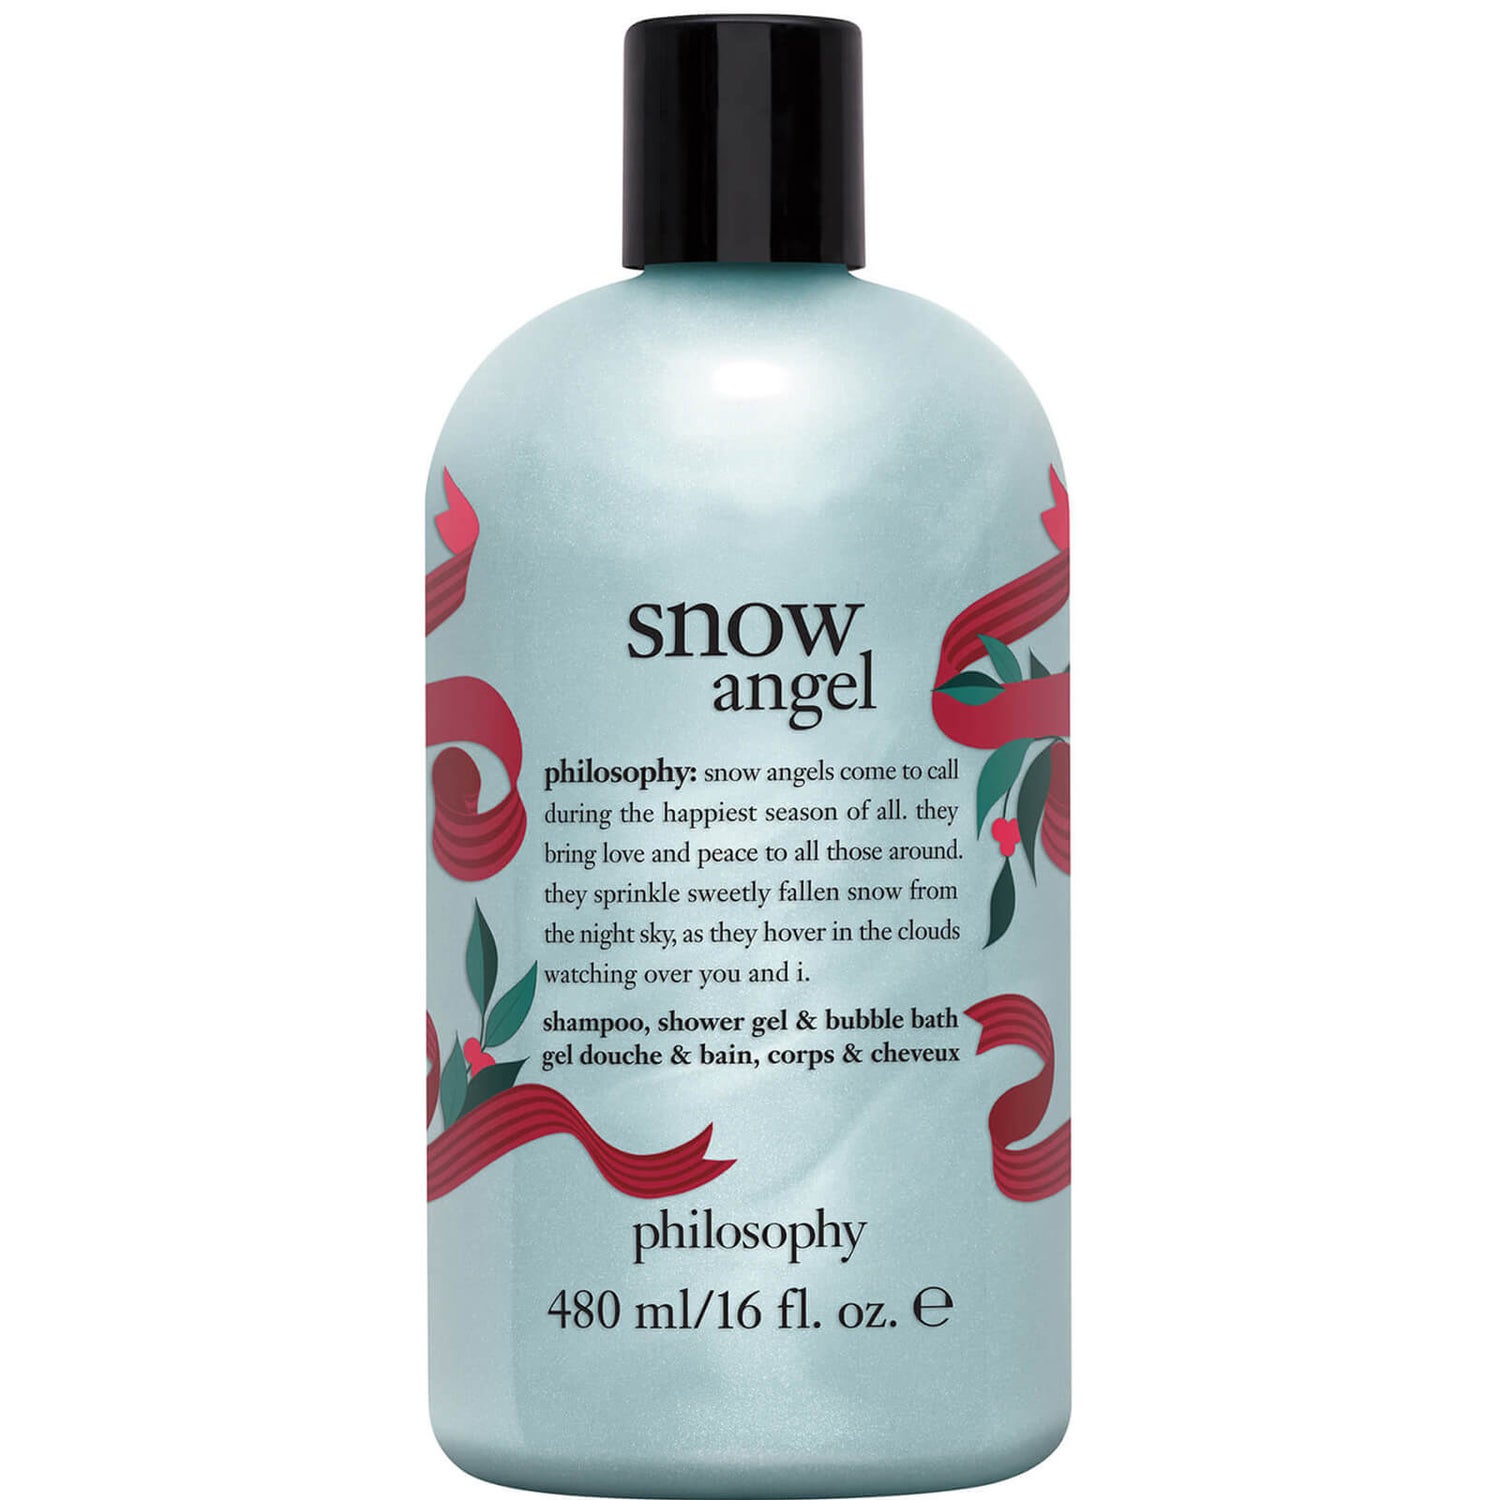 philosopy Snow Angel Shower Gel 480ml(필로소피 스노우 엔젤 샤워젤 480ml)